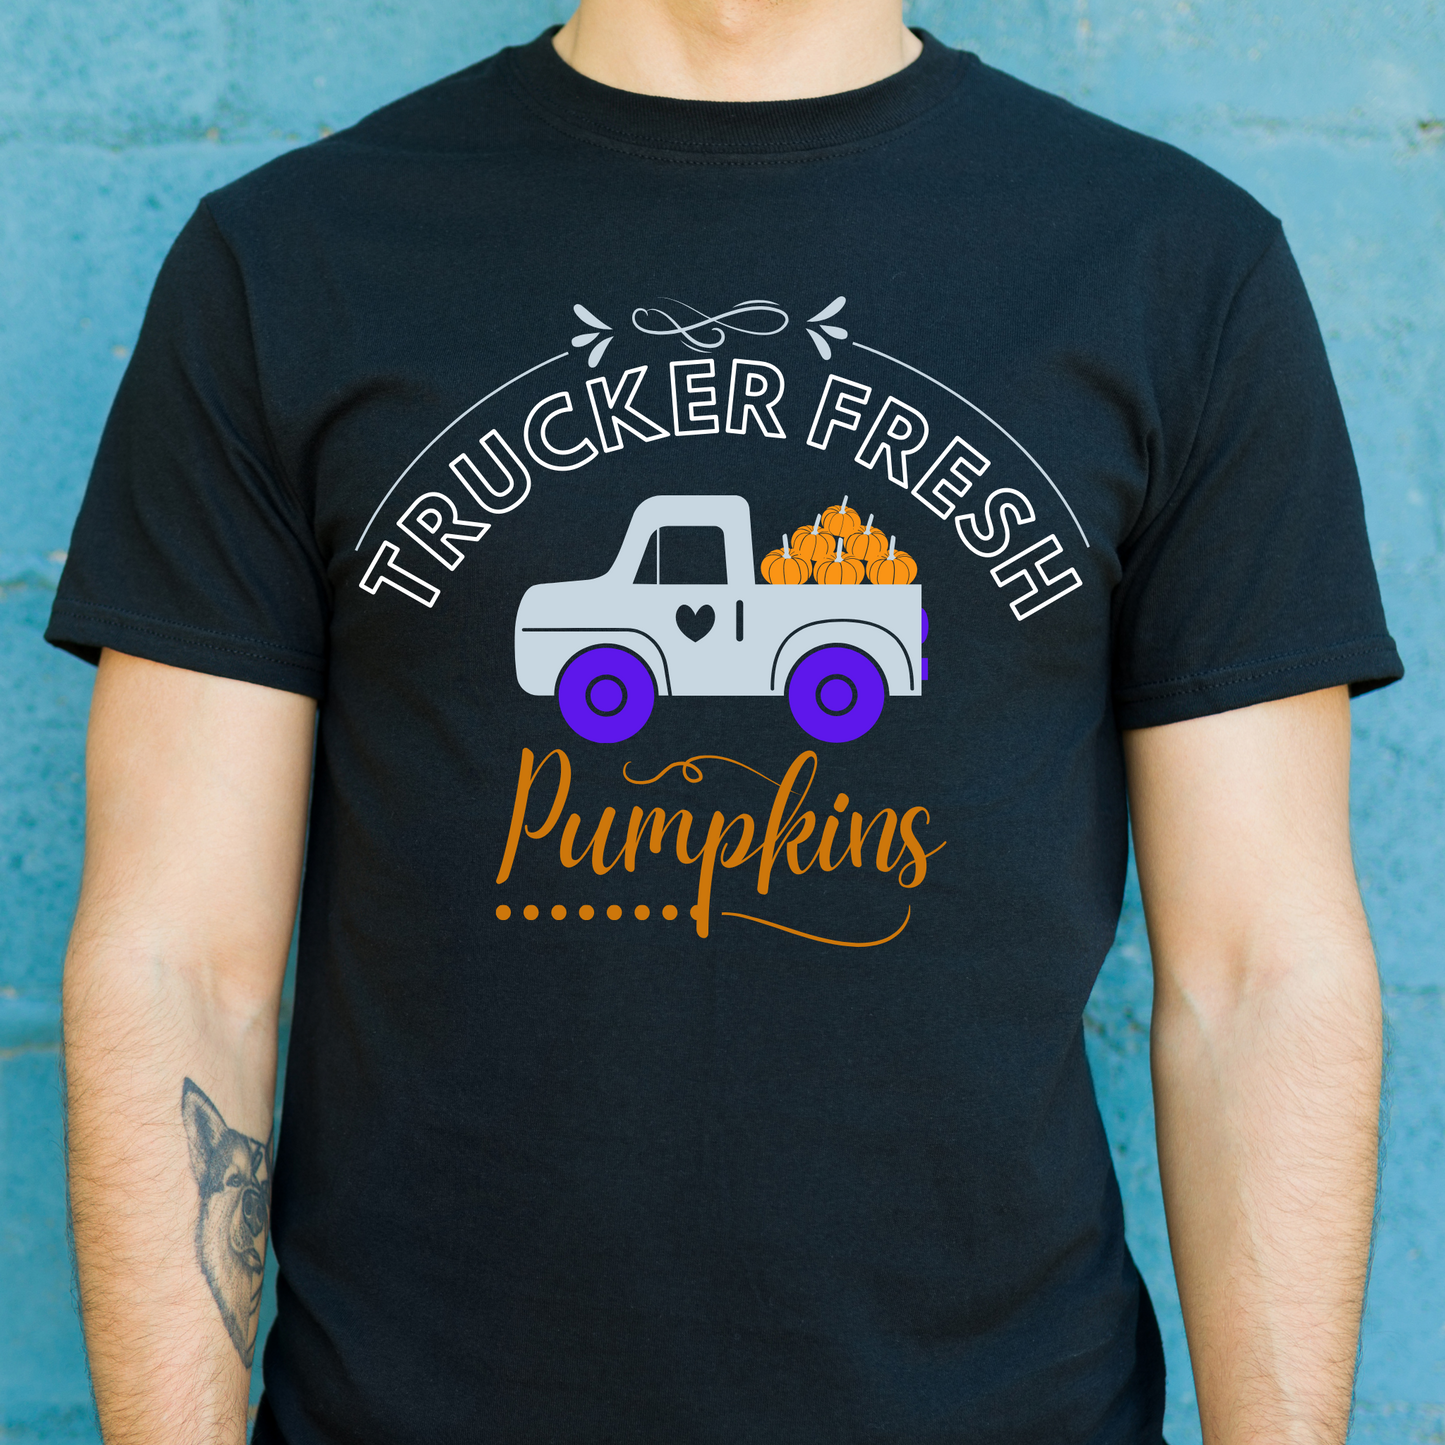 Trucker fresh pumpkins - funny trucker shirt - Premium t-shirt from Lees Krazy Teez - Just $21.95! Shop now at Lees Krazy Teez